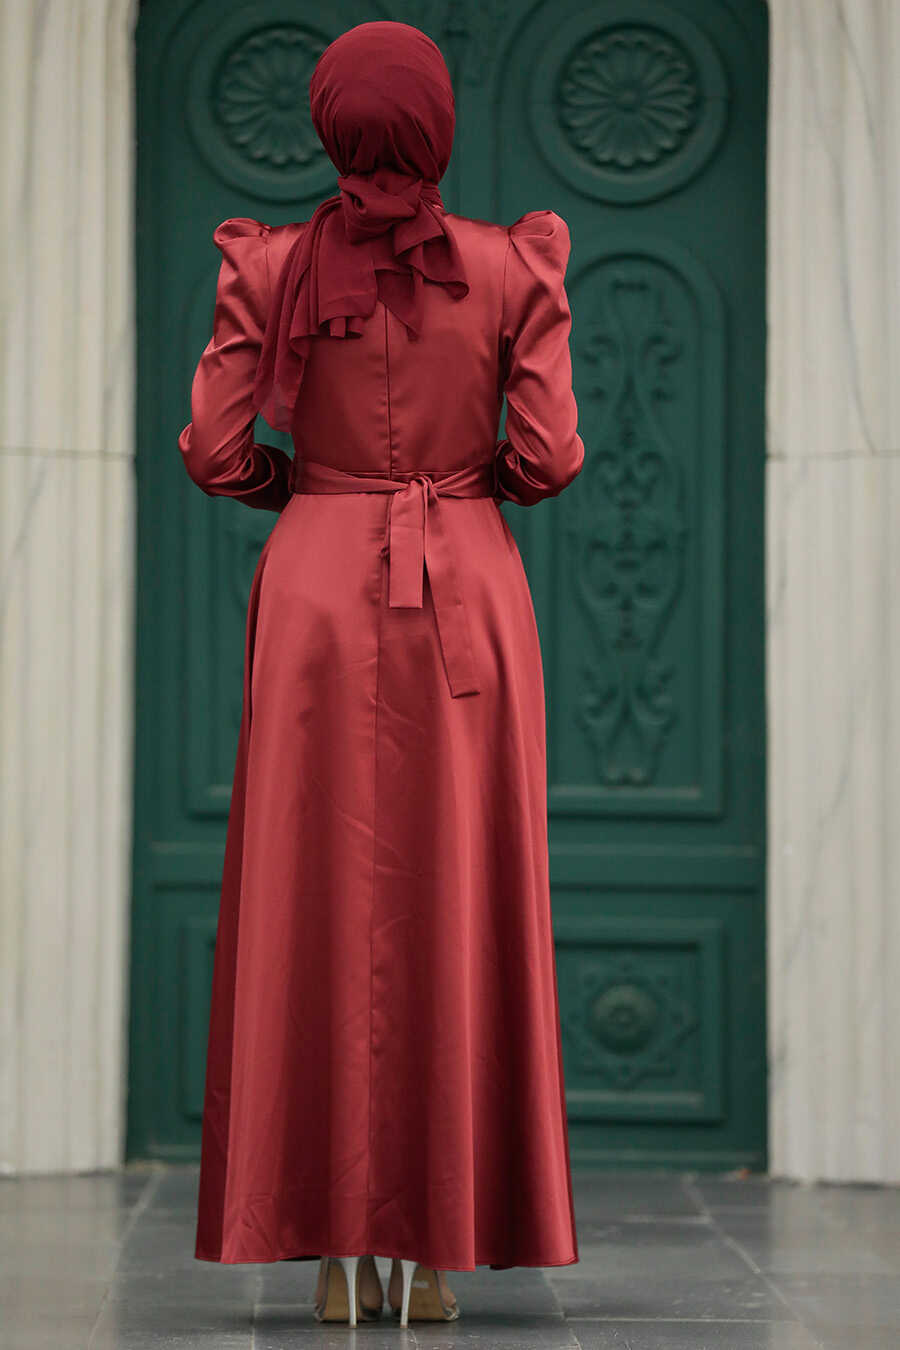 Neva Style - Satin Claret Red High Quality Dress 7725BR